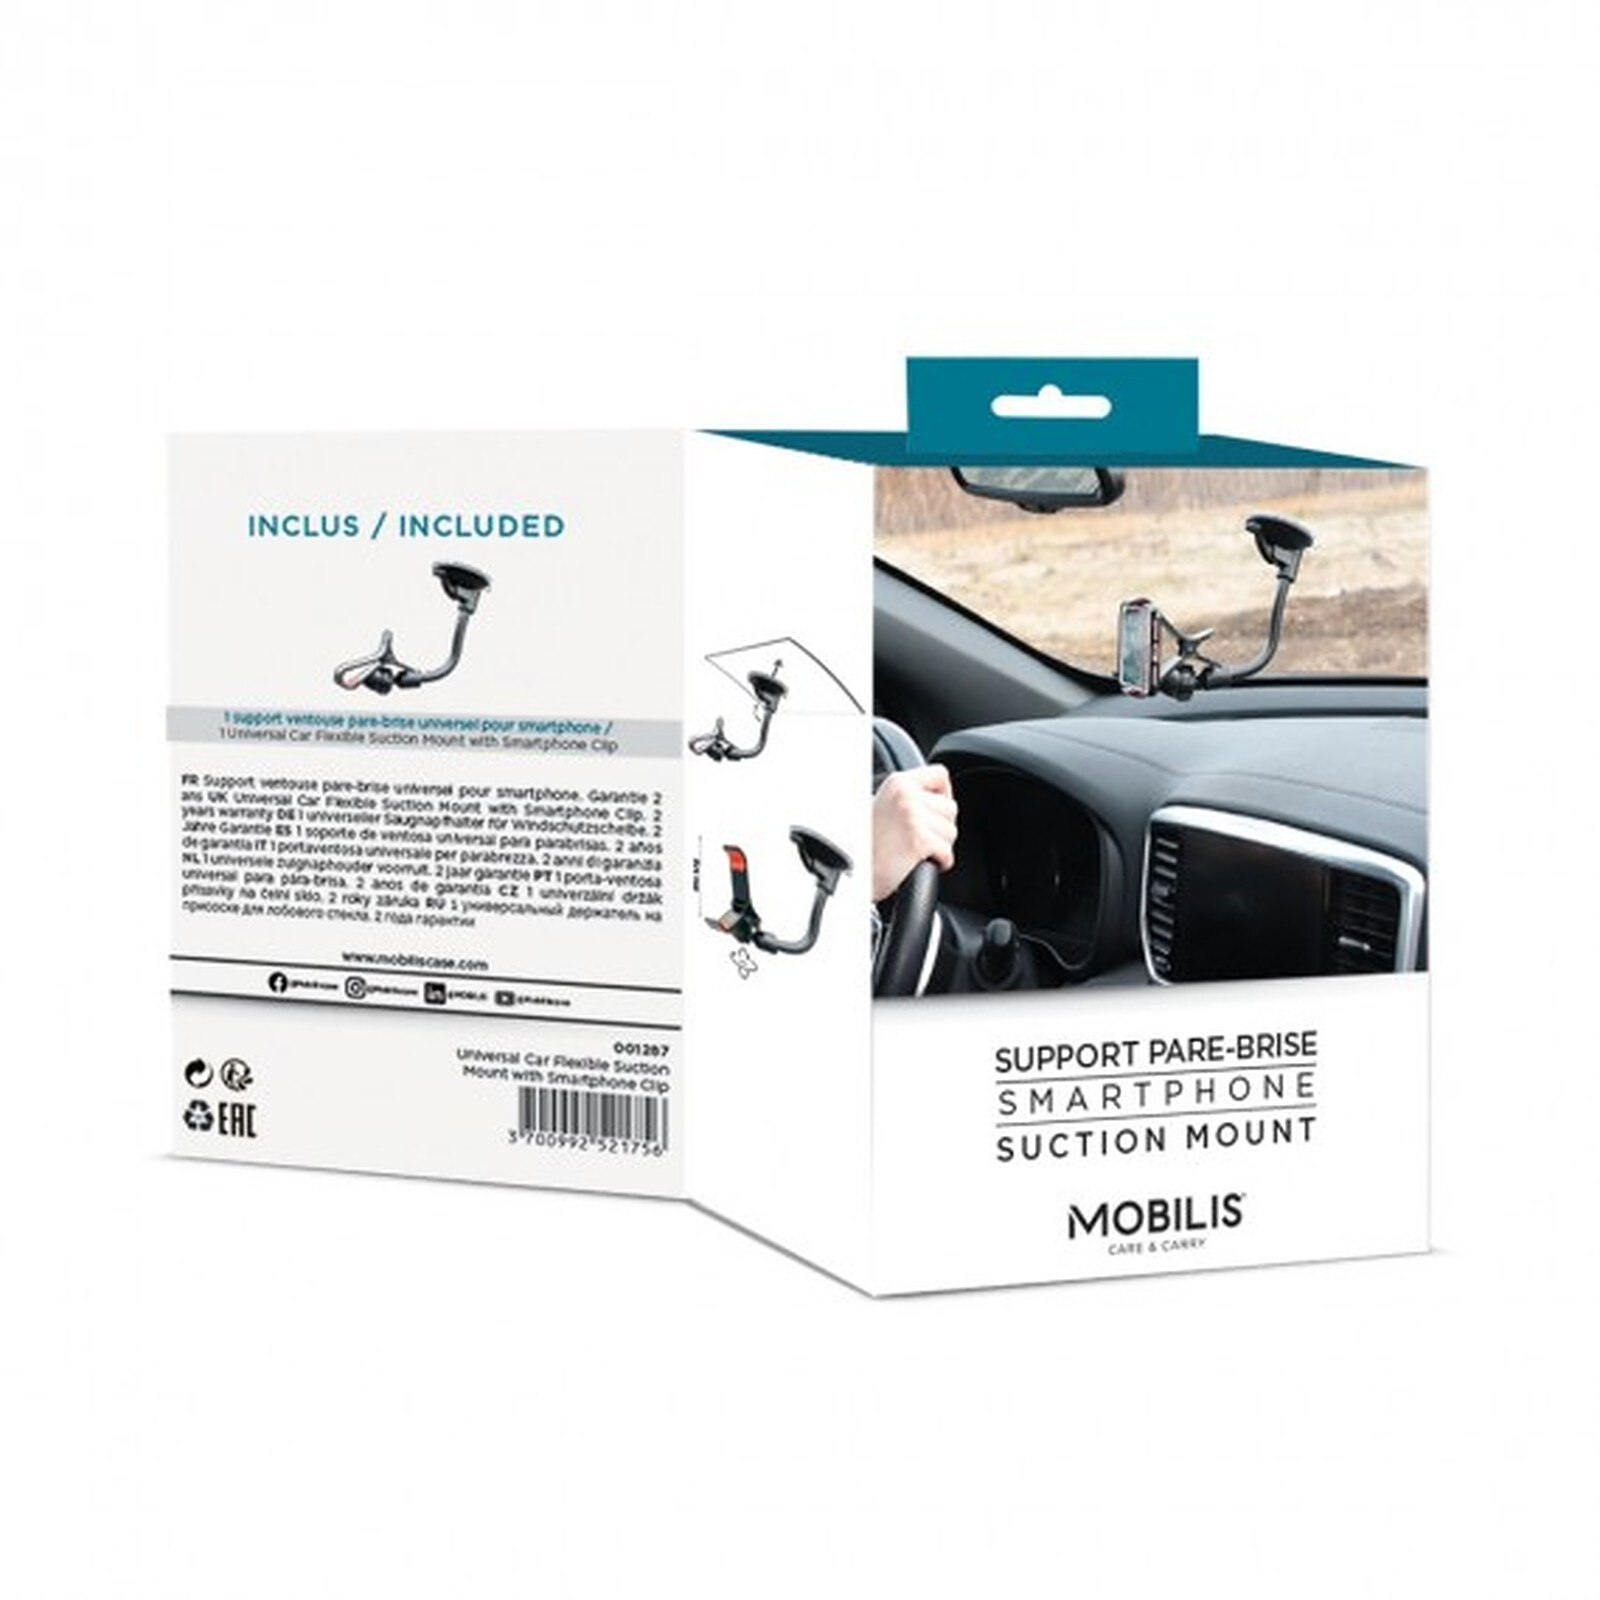 Belkin Support Voiture avec chargeur intégré MagSafe avec allume-cigare  (WIC004btBK) - Support voiture - Garantie 3 ans LDLC